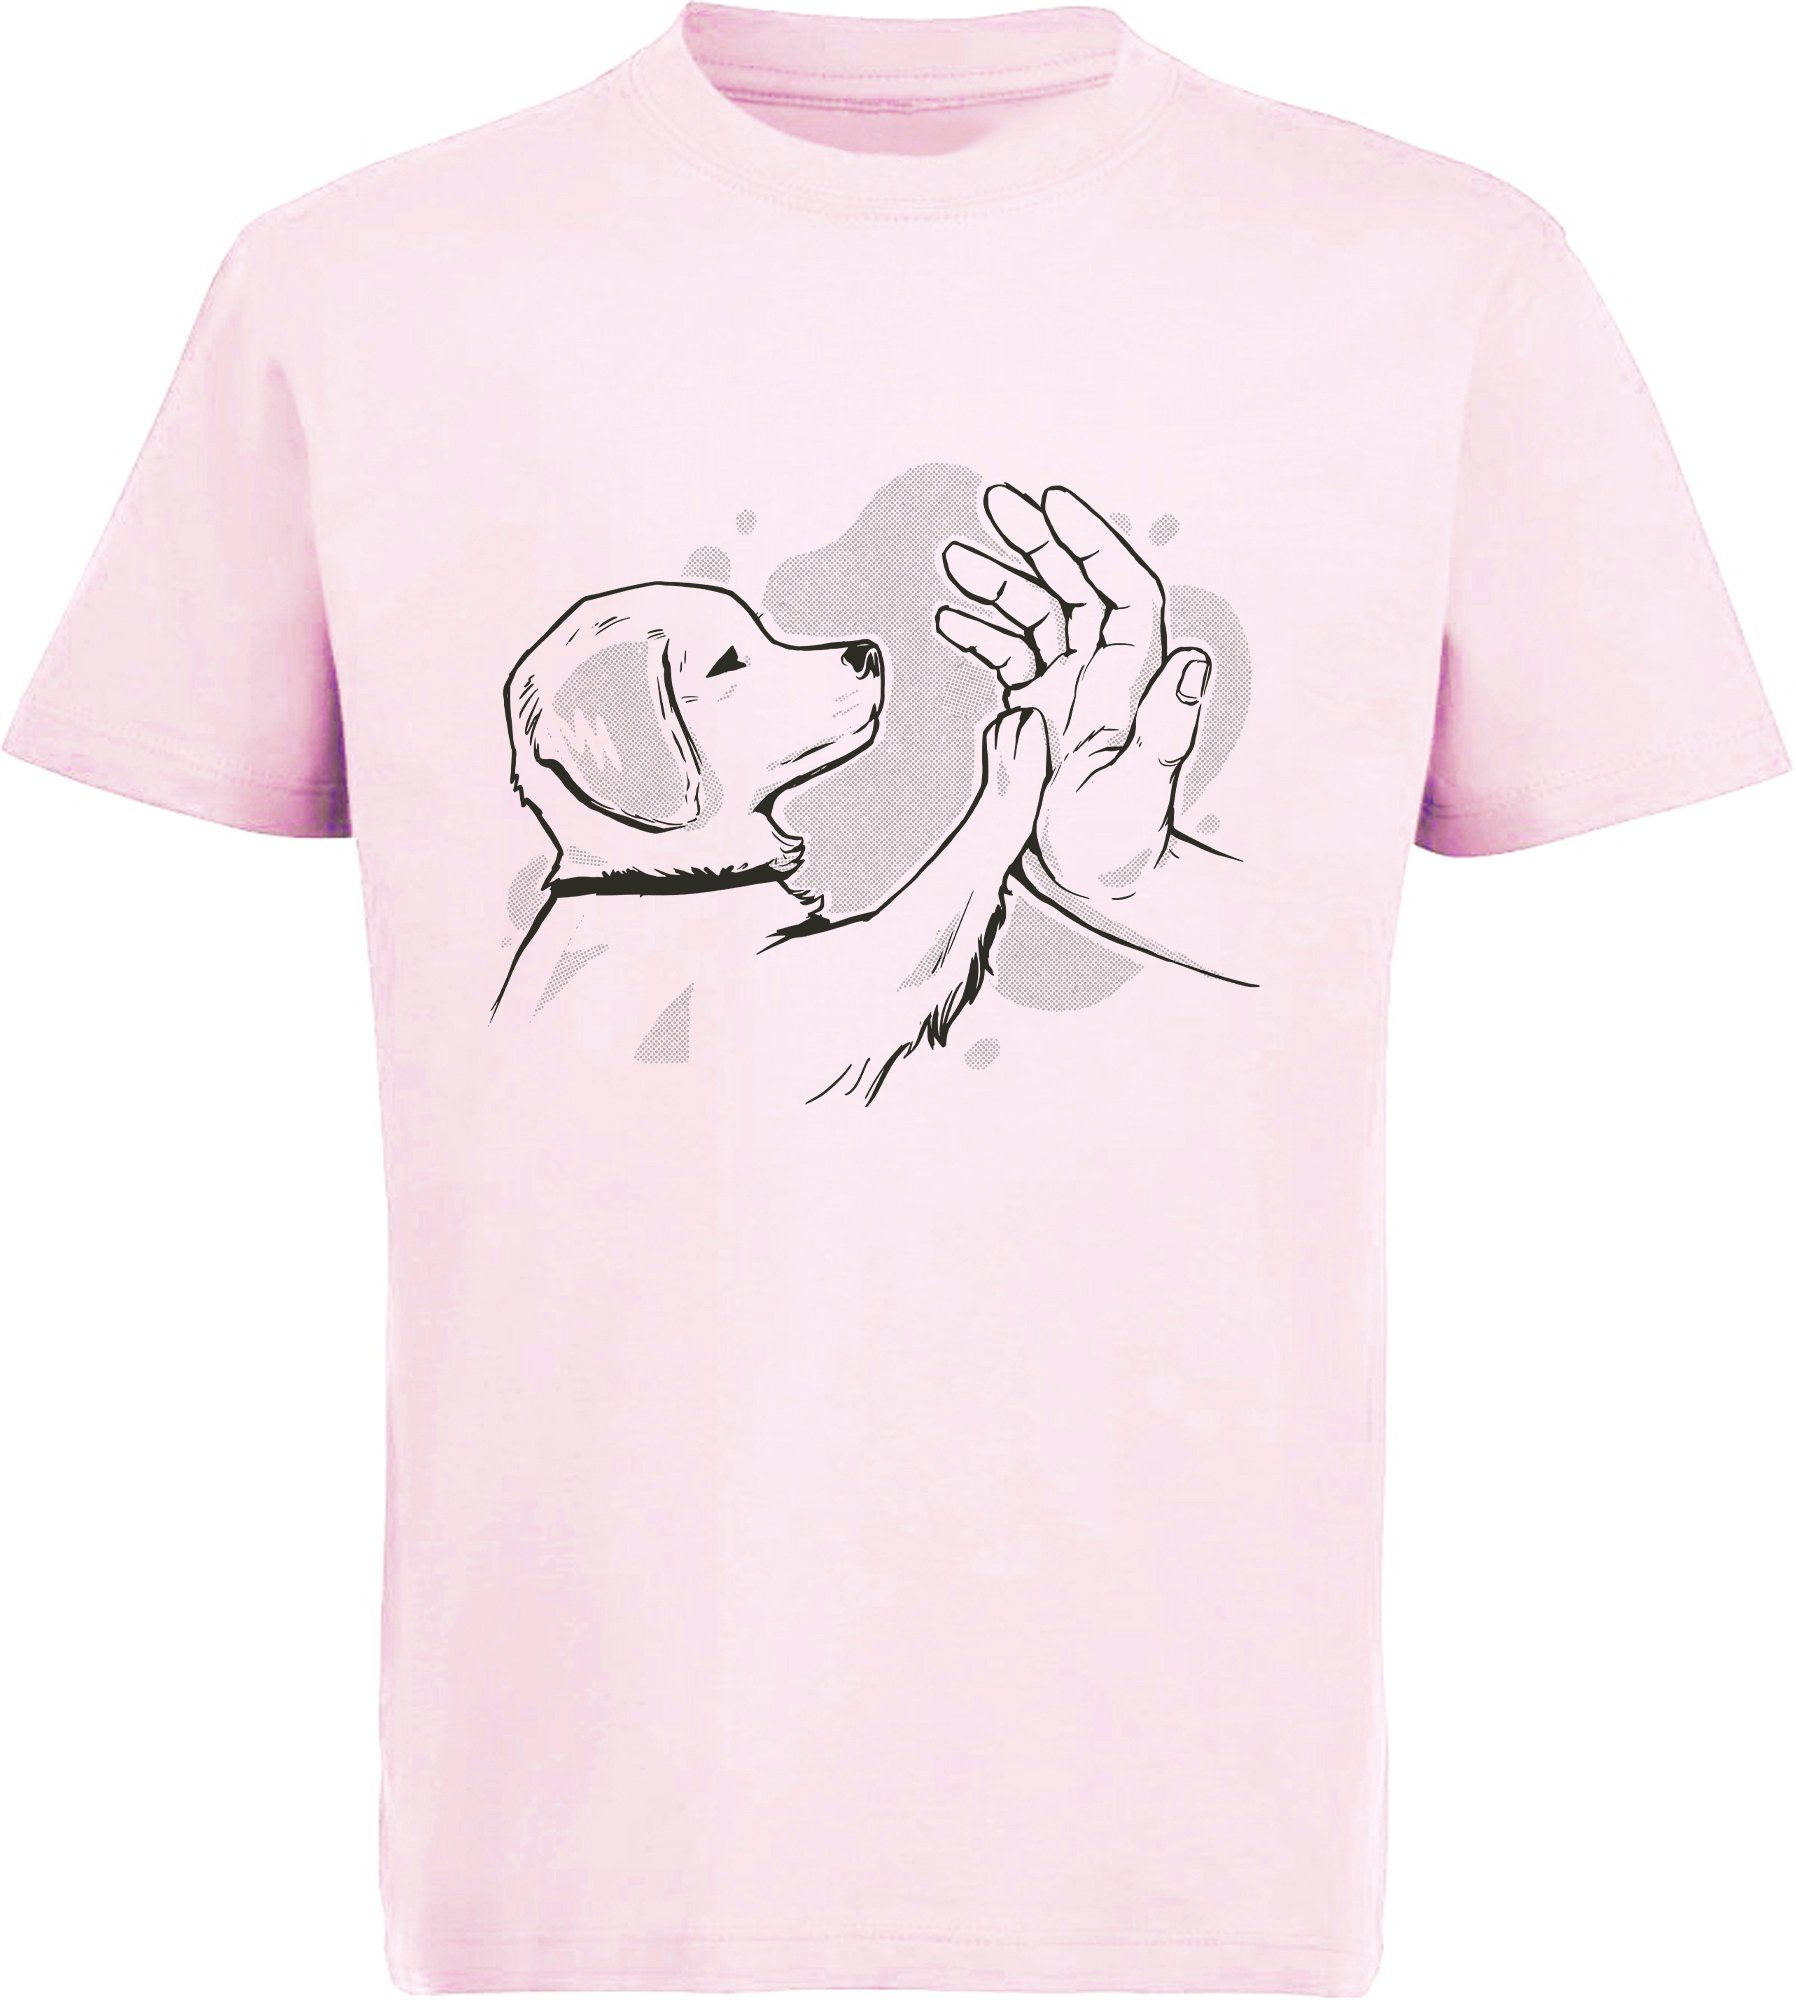 MyDesign24 Print-Shirt Kinder Hunde T-Shirt bedruckt - Labrador Welpe der Pfötchen gibt Baumwollshirt mit Aufdruck, i241 rosa